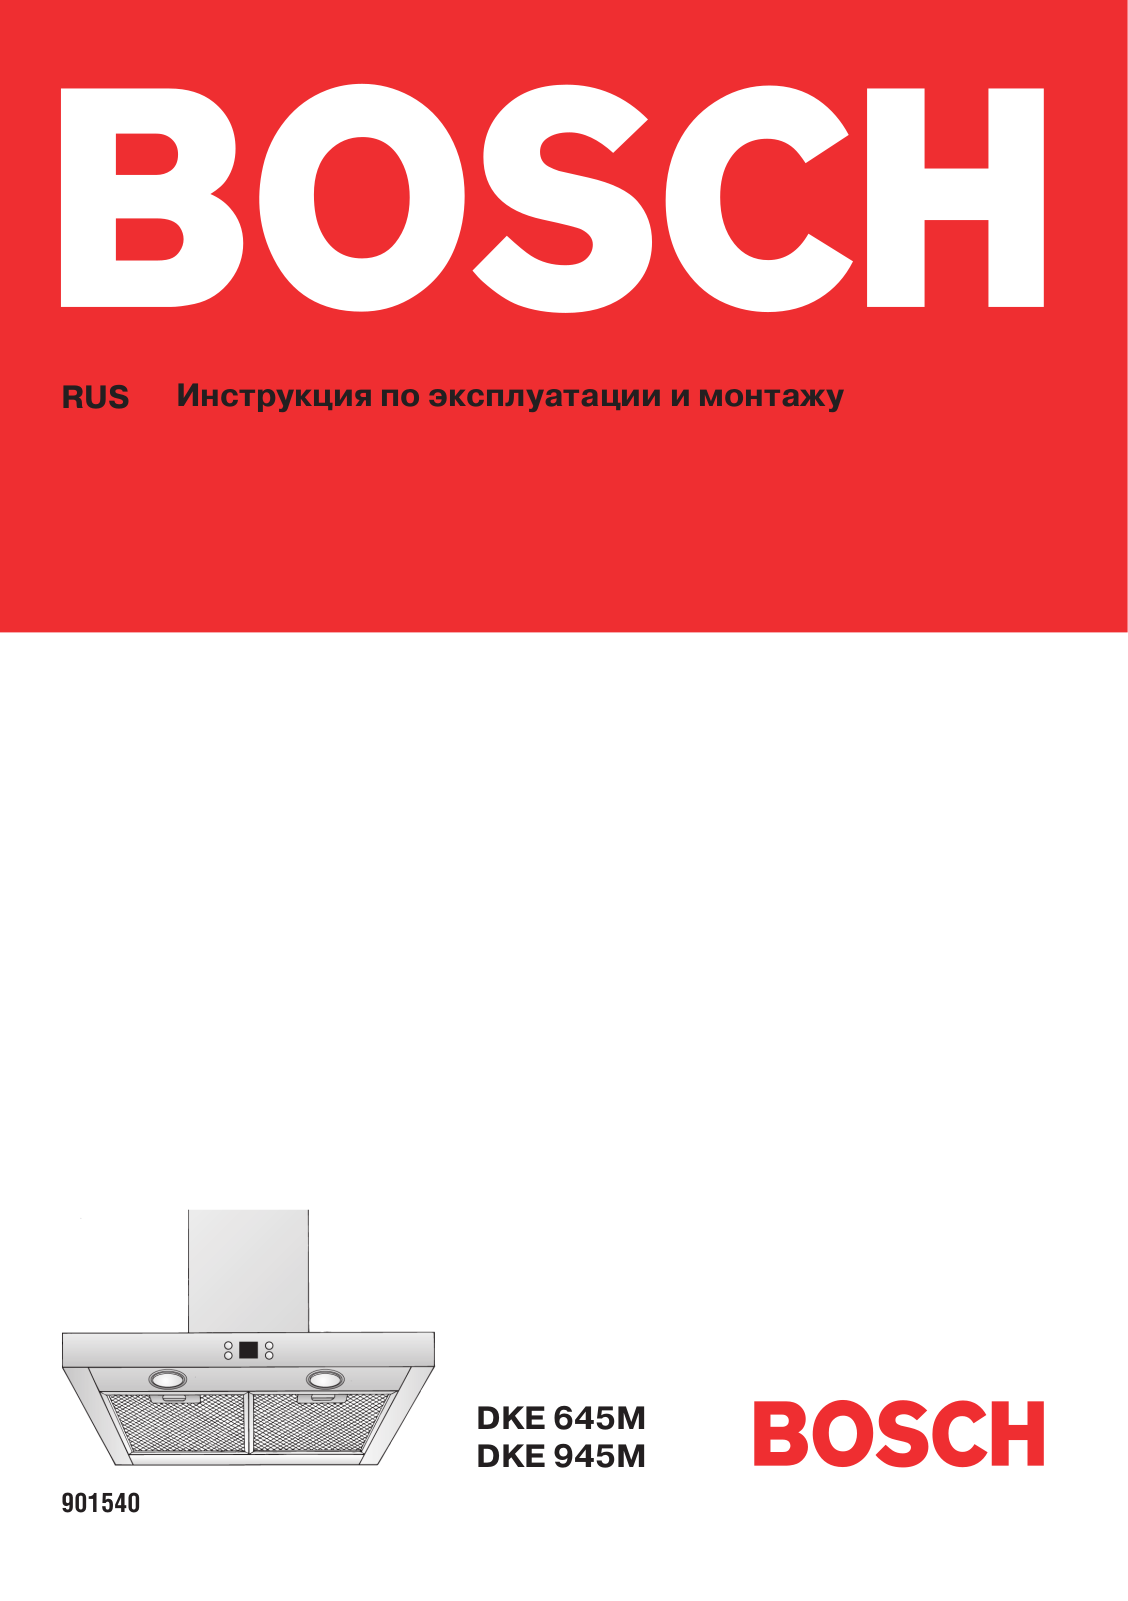 Bosch DKE 645M User Manual